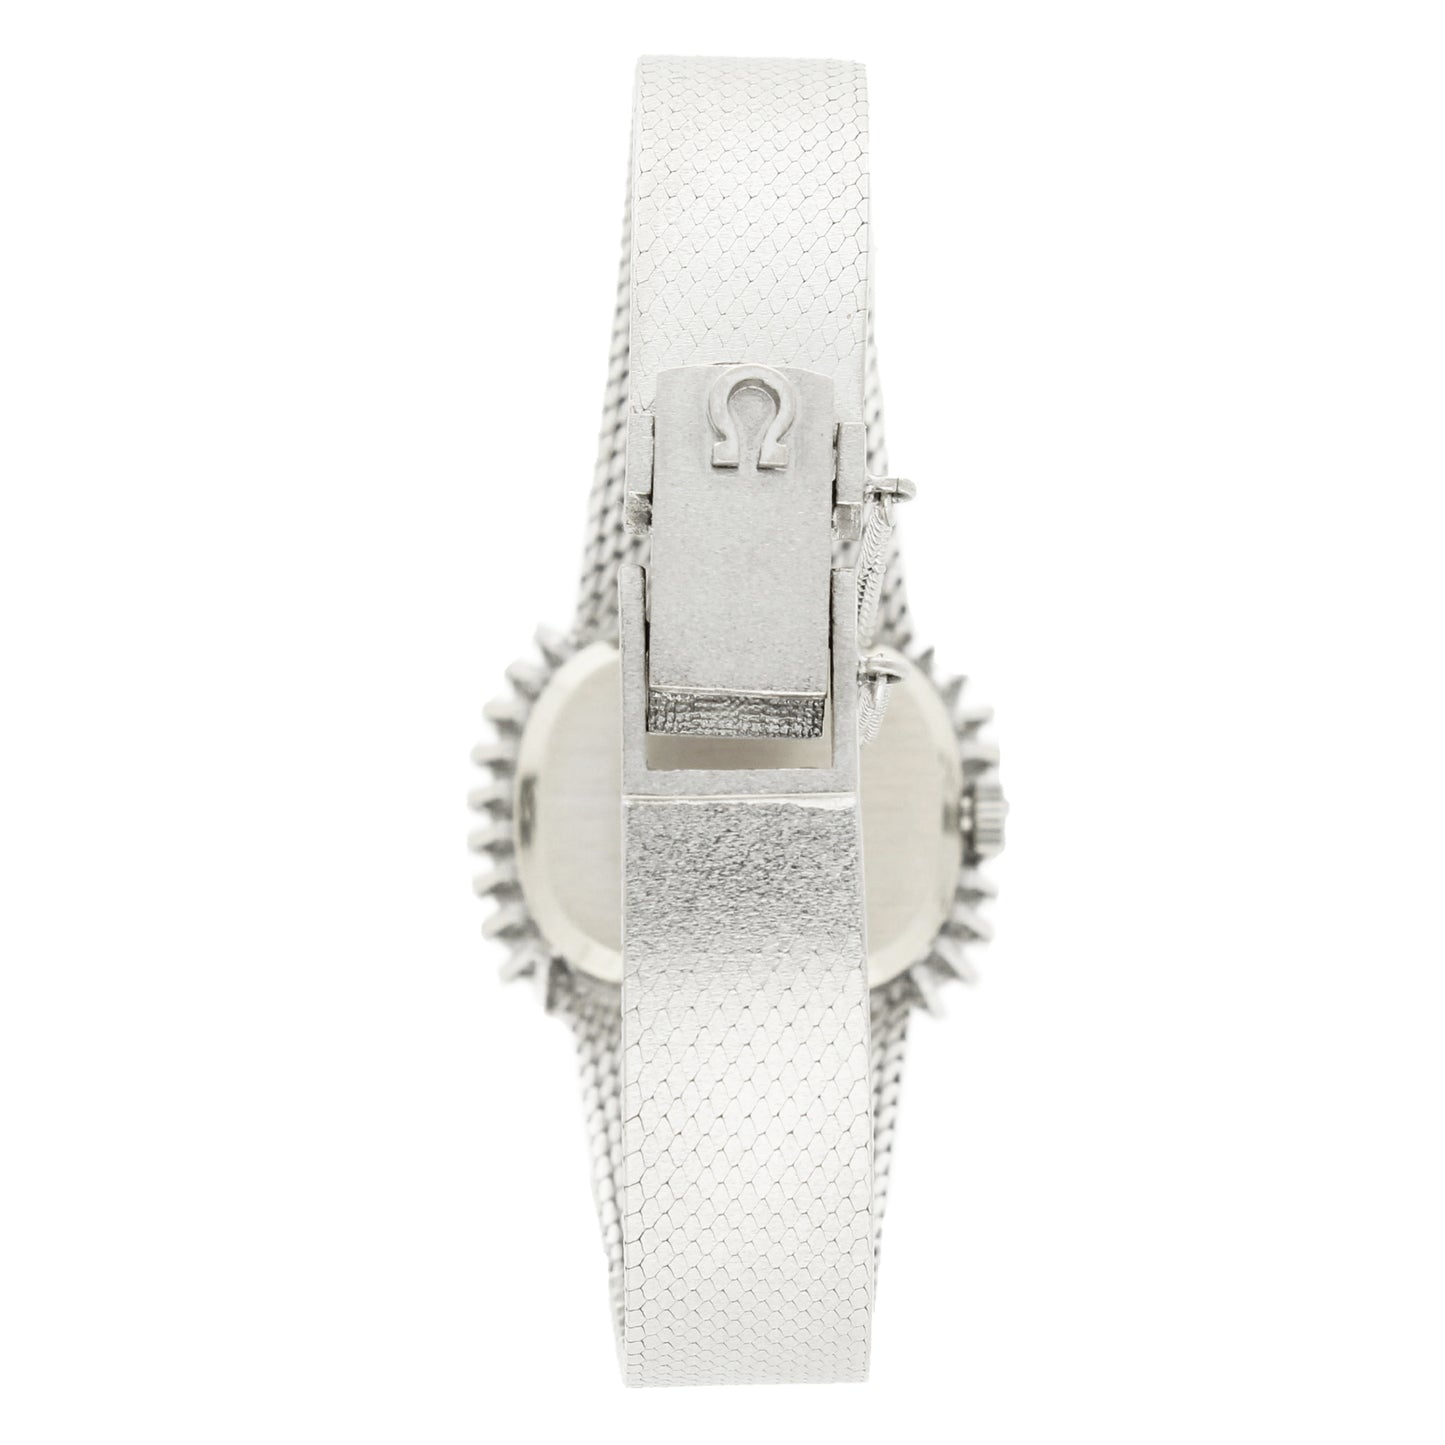 18ct white gold and diamond set OMEGA De Ville bracelet watch. Made 1974